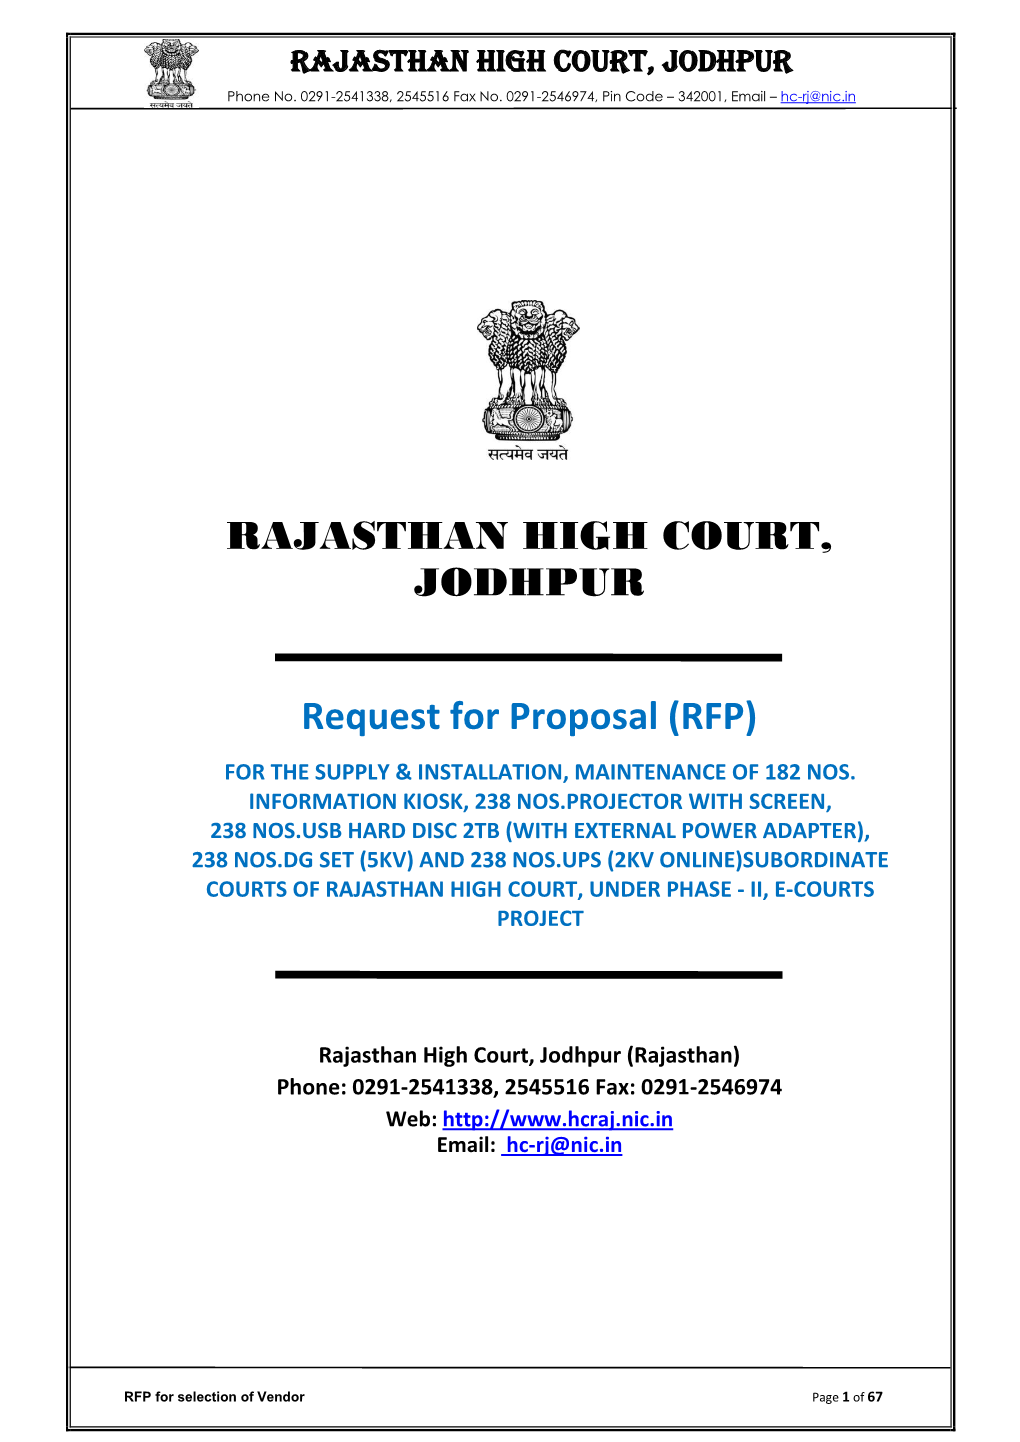 RAJASTHAN HIGH COURT, JODHPUR Request for Proposal